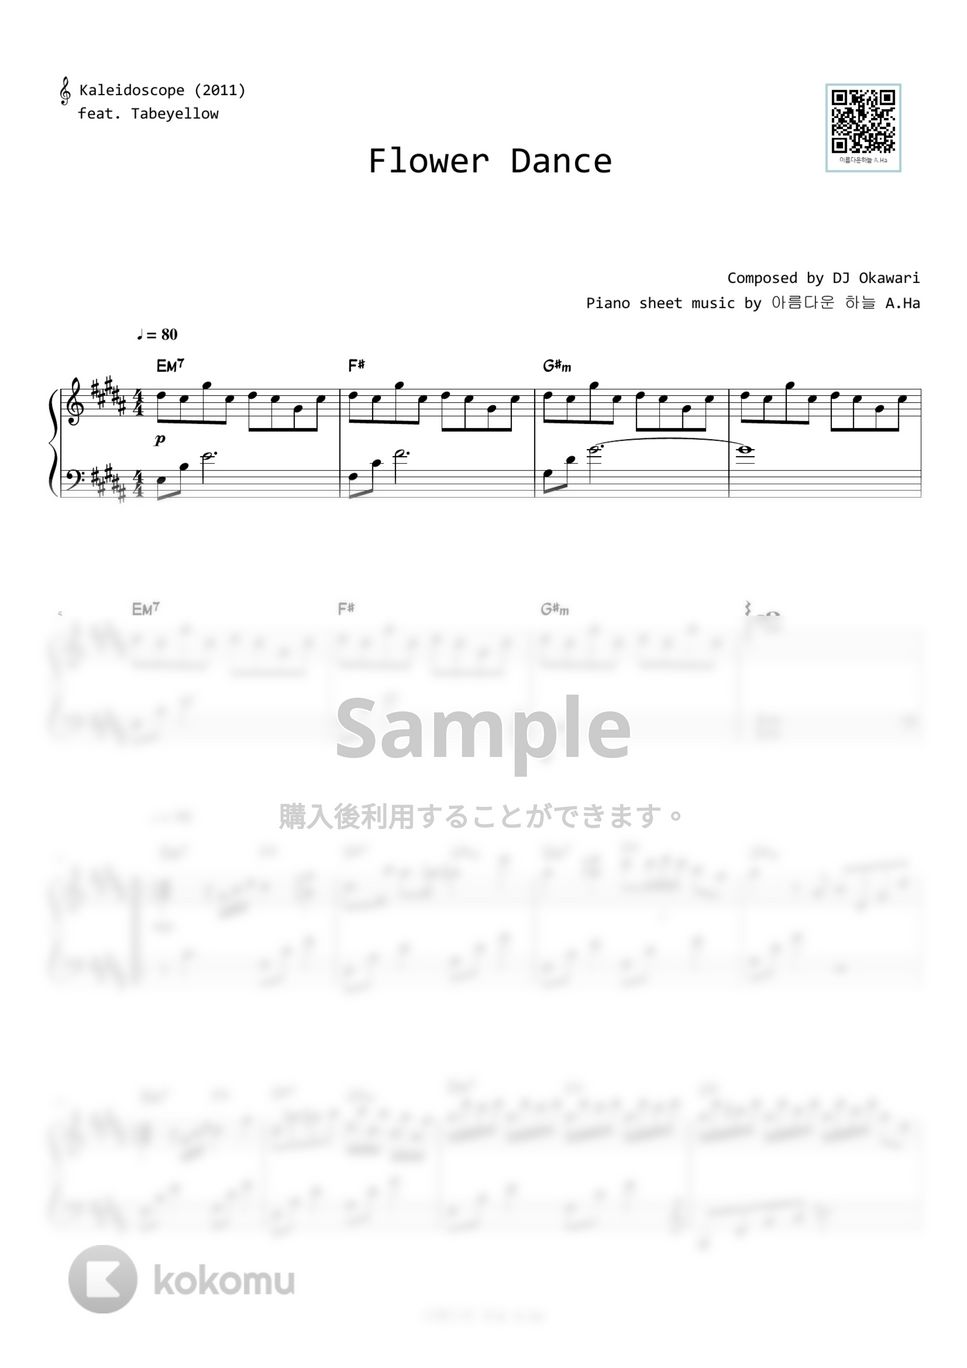 DJ OKAWARI - Flower Dance (Level 3 -Original Key) by A.Ha